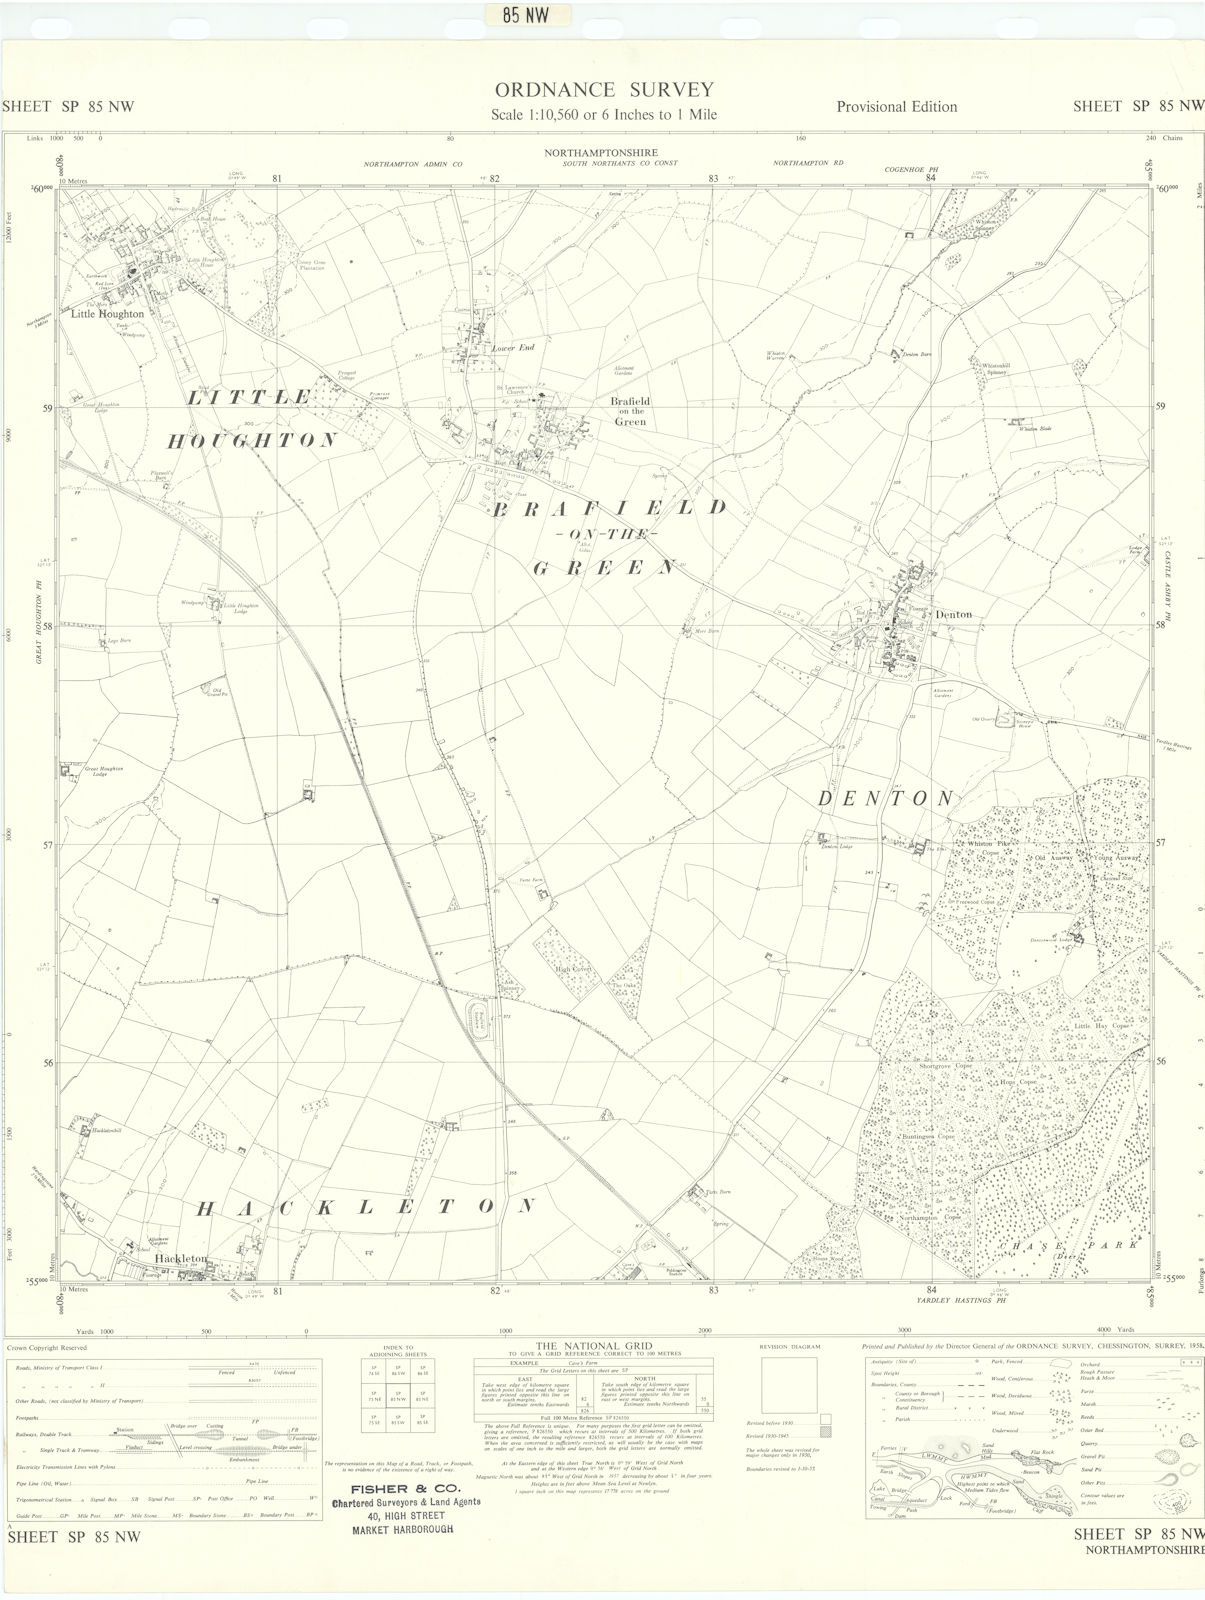 Associate Product Ordnance Survey SP85NW Northants Little Houghton Denton Brafield/Green 1958 map